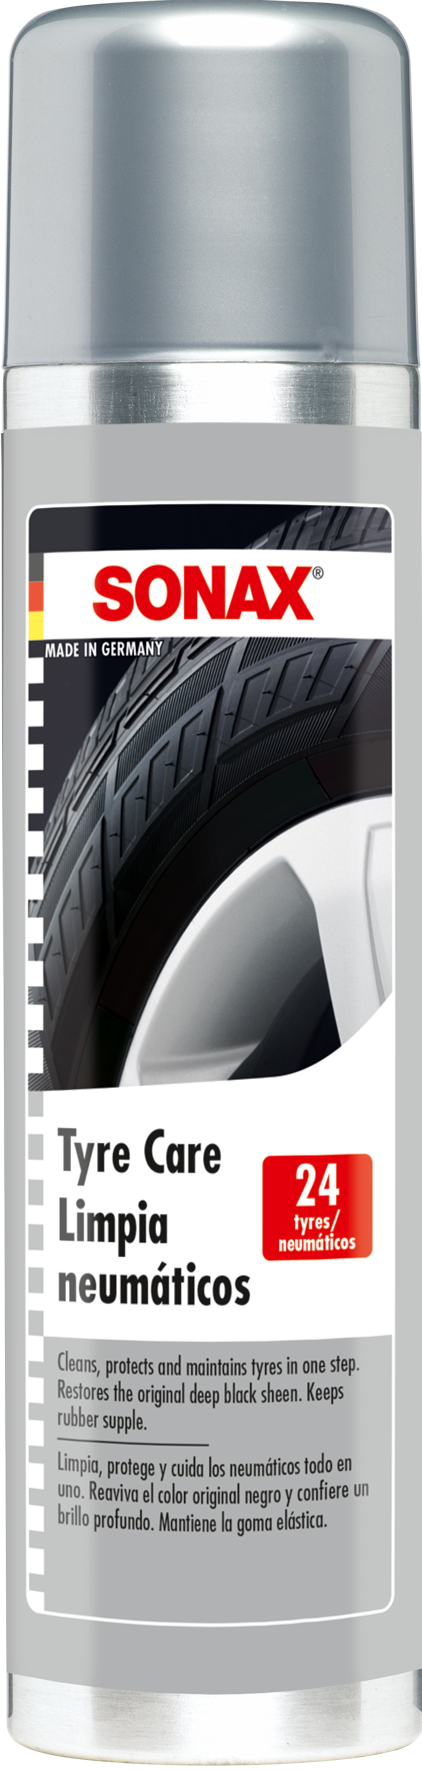 Tyre Care- Chăm Sóc Lốp (Vỏ)